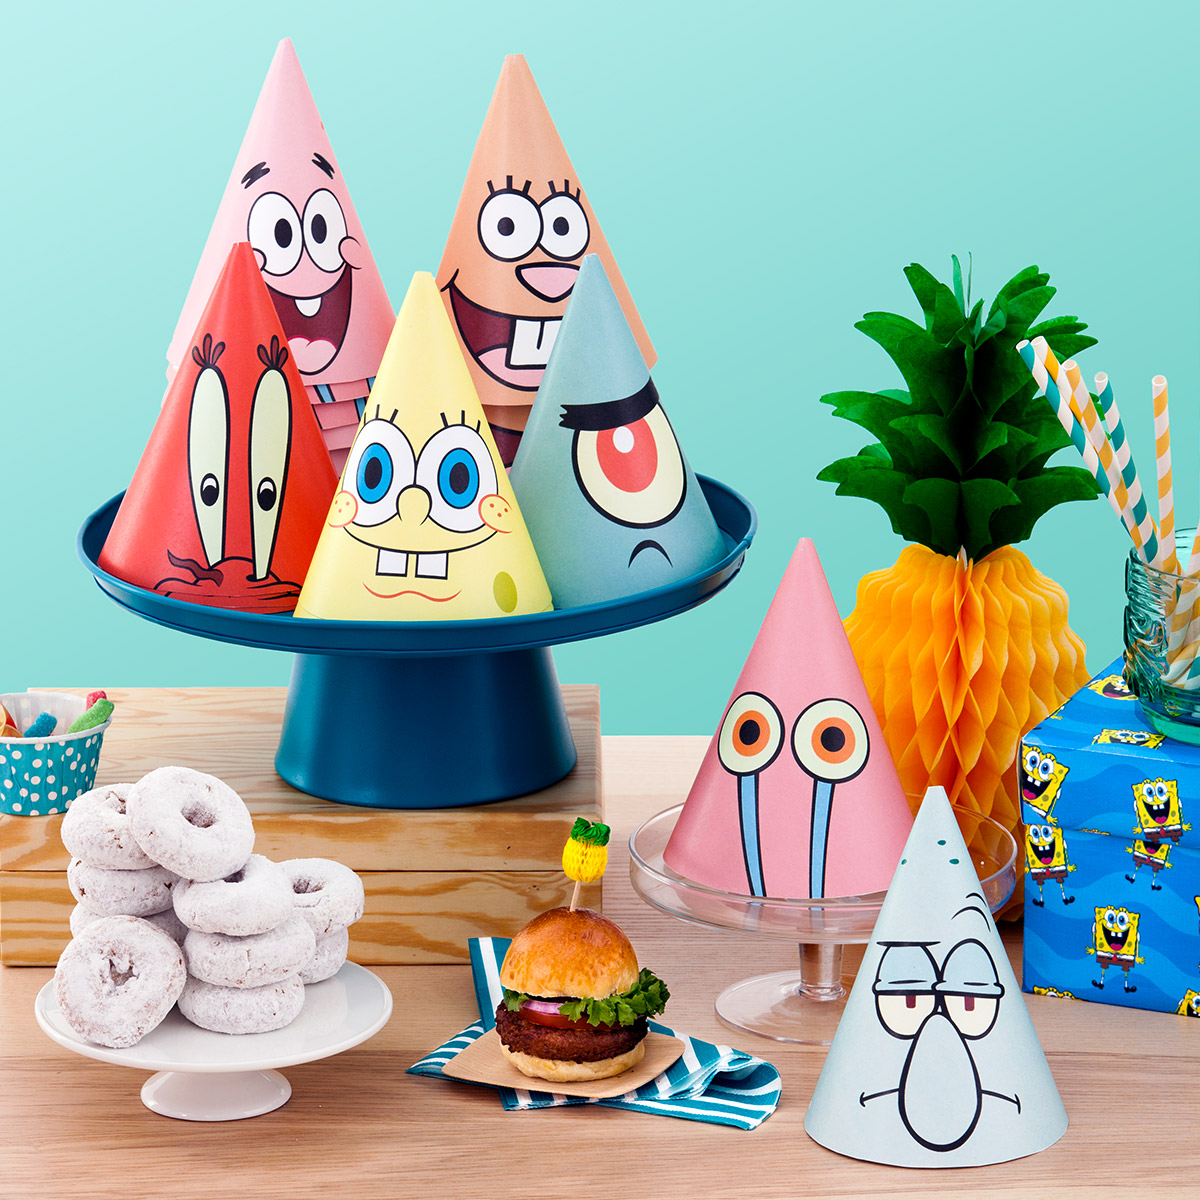 spongebob party